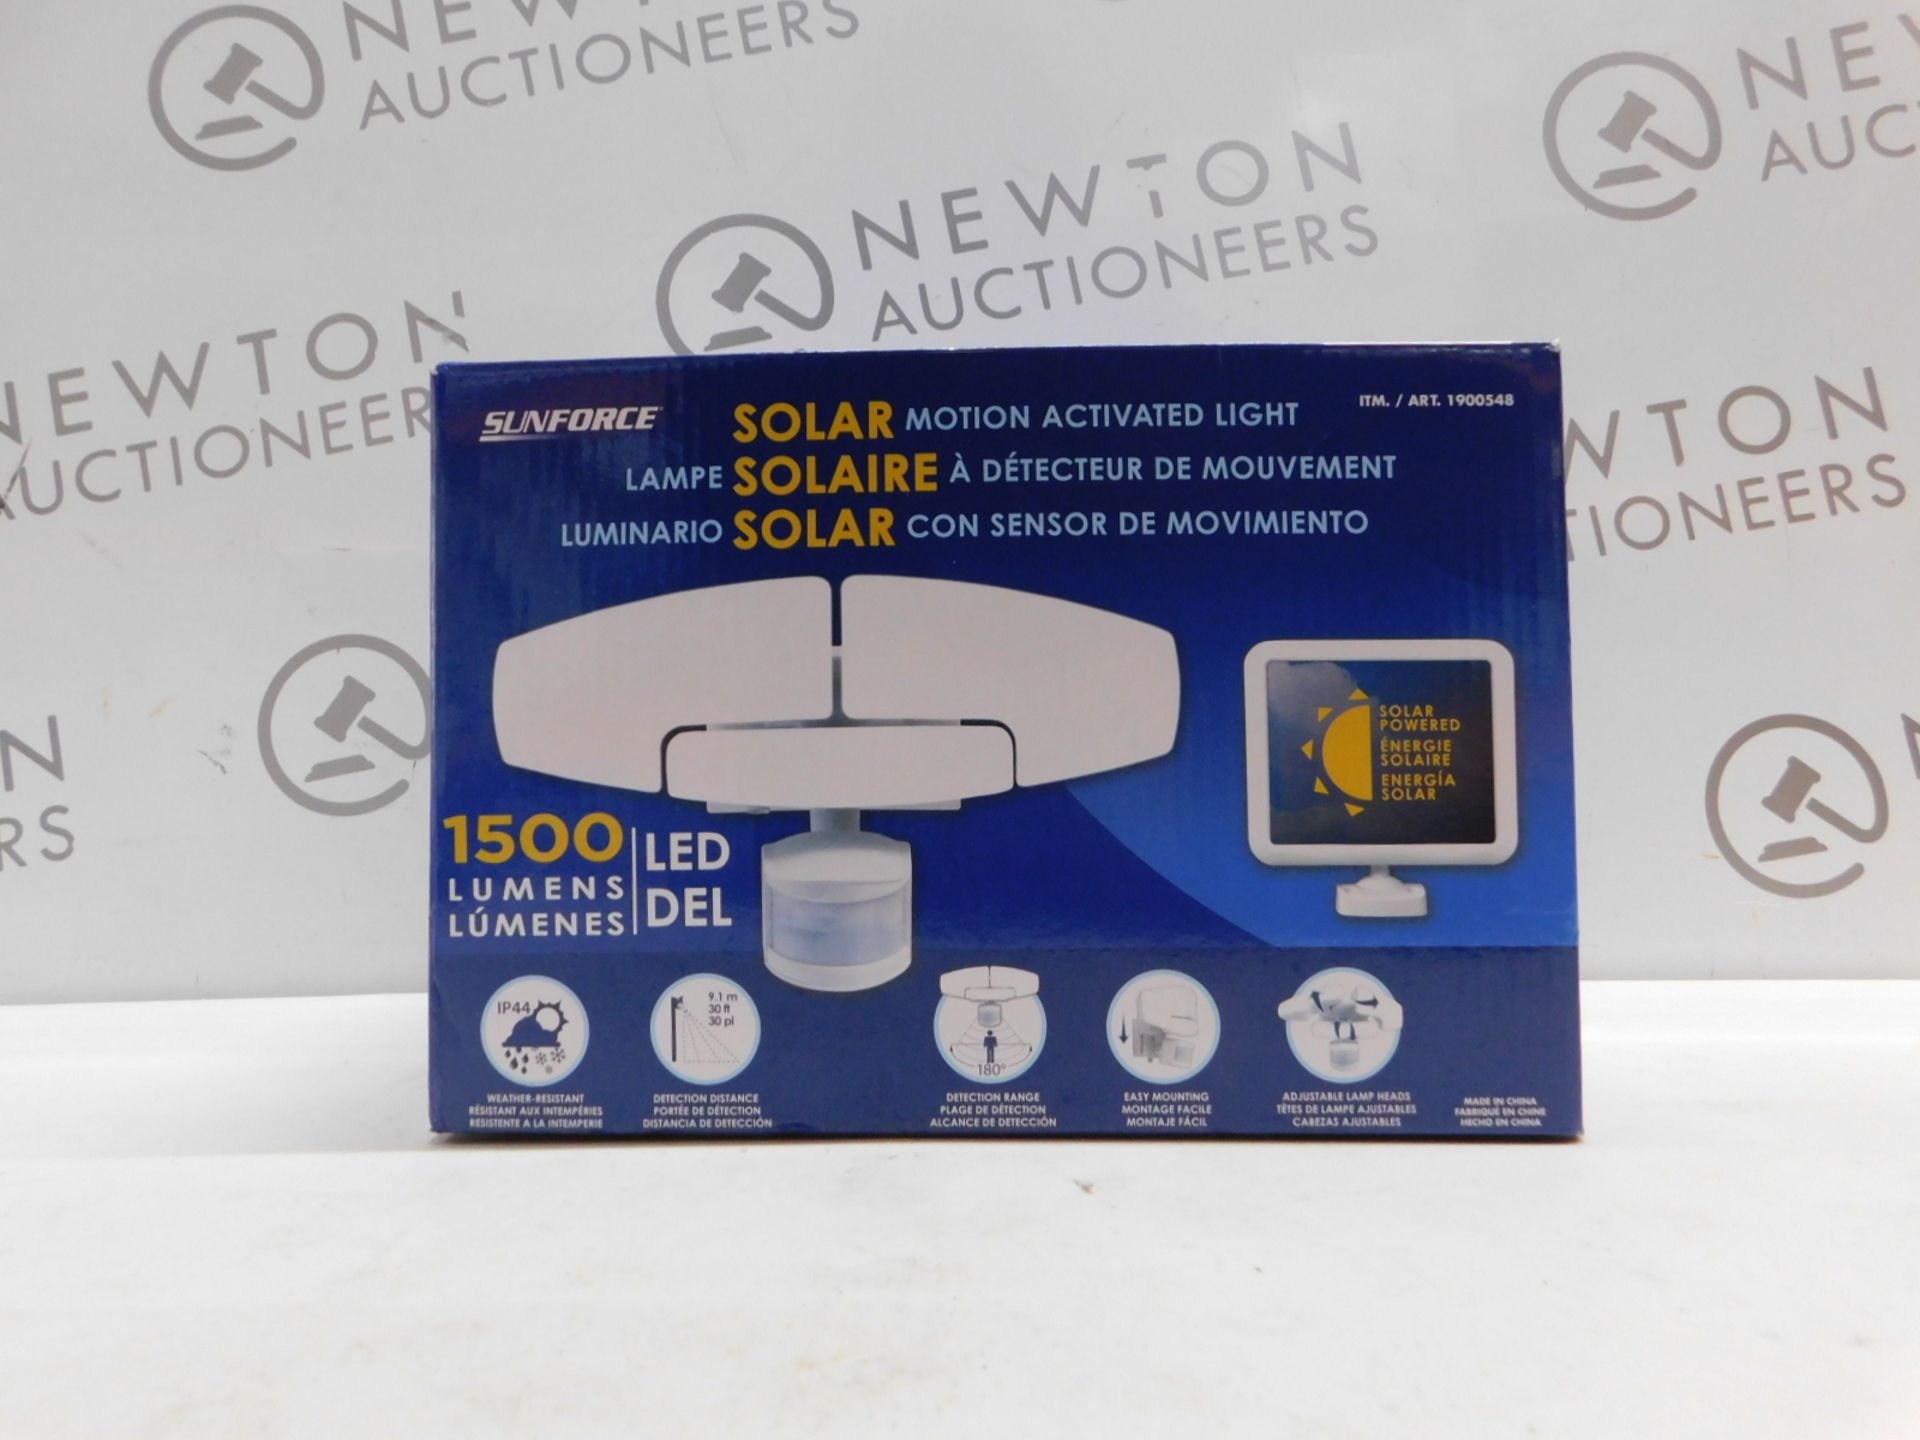 1 BOXED SUNFORCE LED TRIPLE HEAD SOLAR MOTION ACTIVATED LIGHT RRP Â£119.99